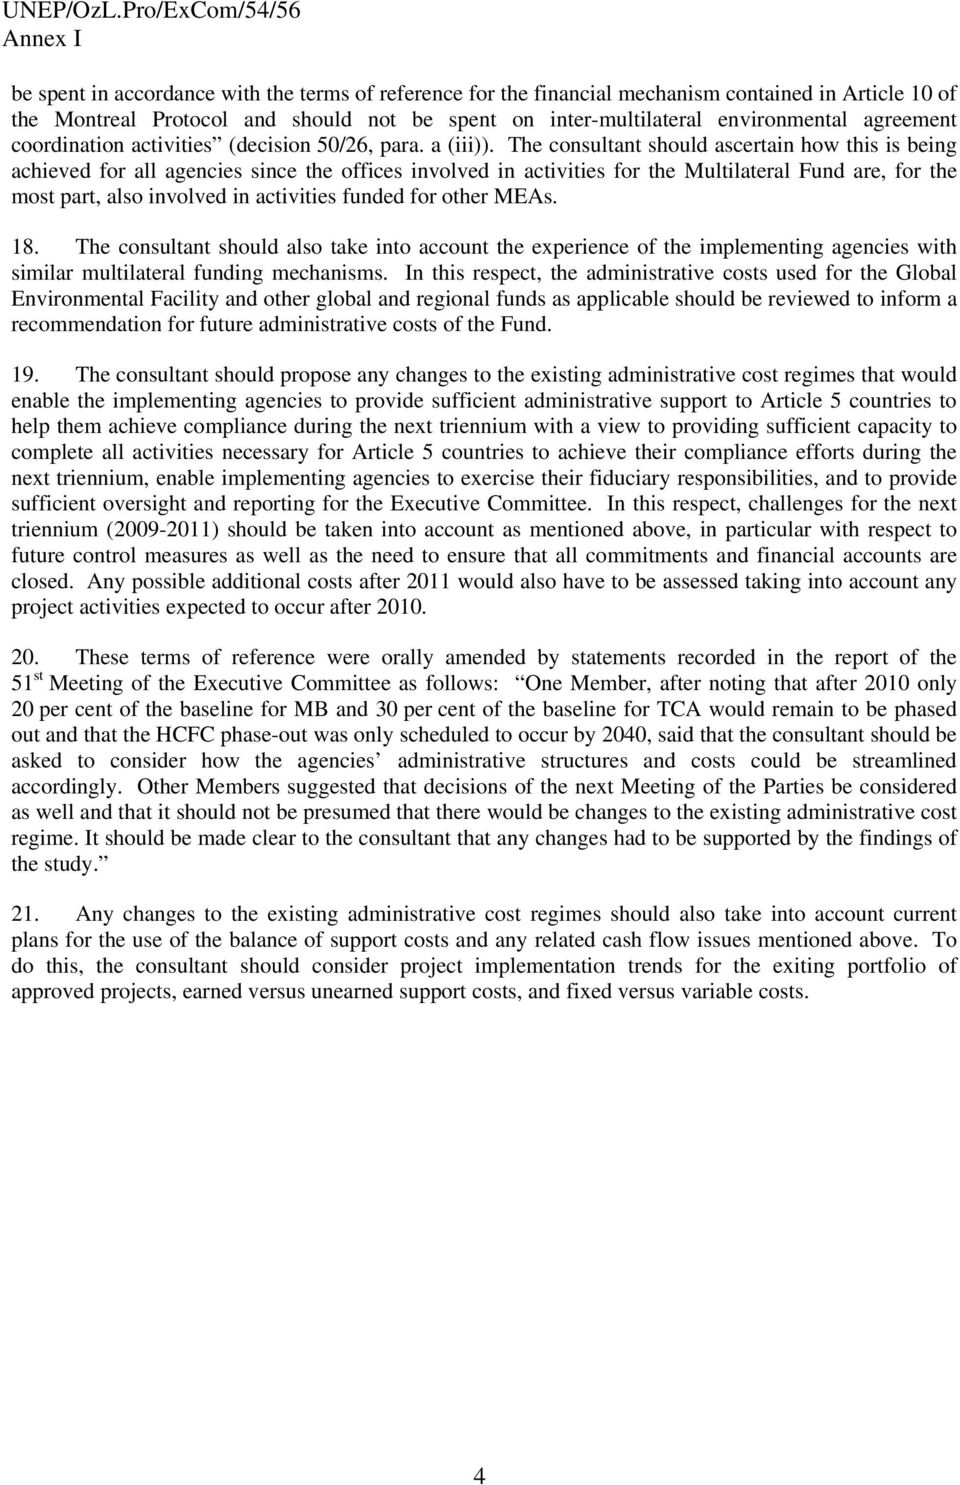 environmental agreement coordination activities (decision 50/26, para. a (iii)).